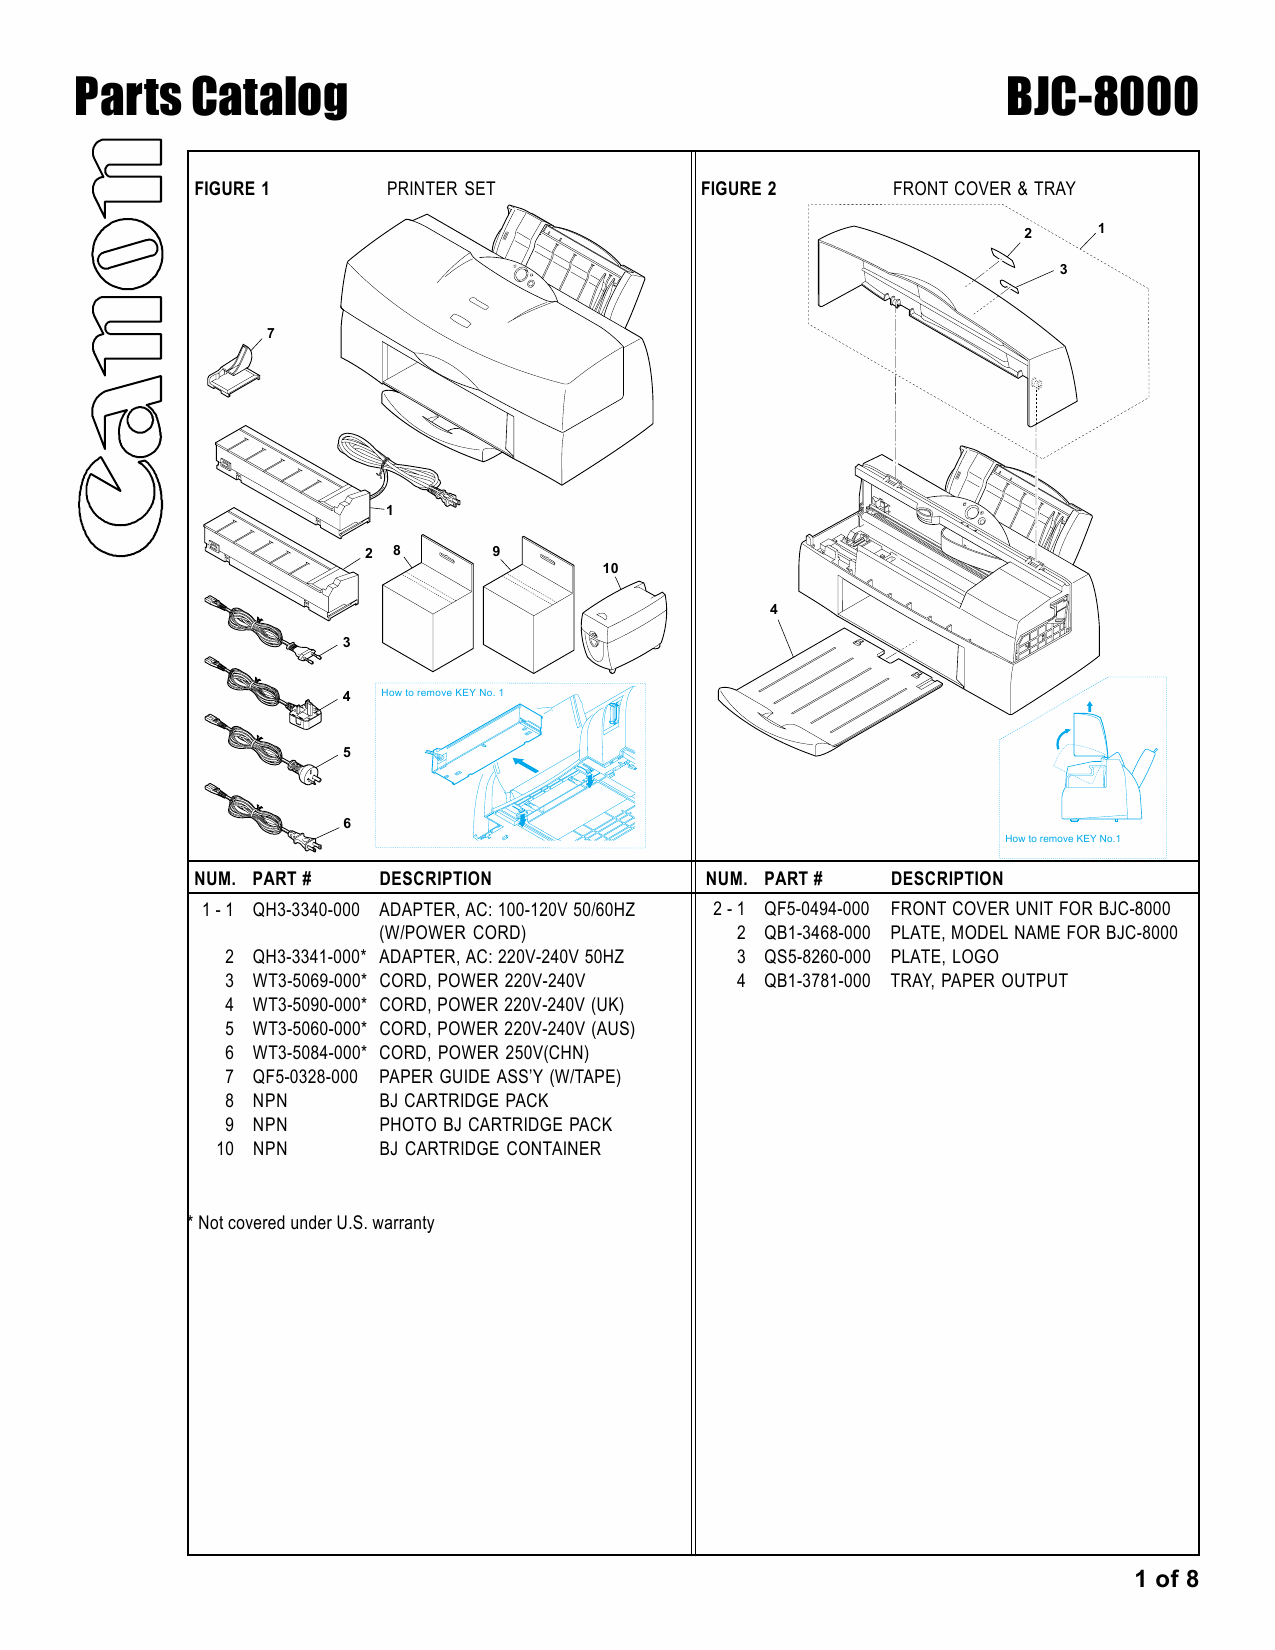 Canon BubbleJet BJC-8000 Parts Catalog Manual-2